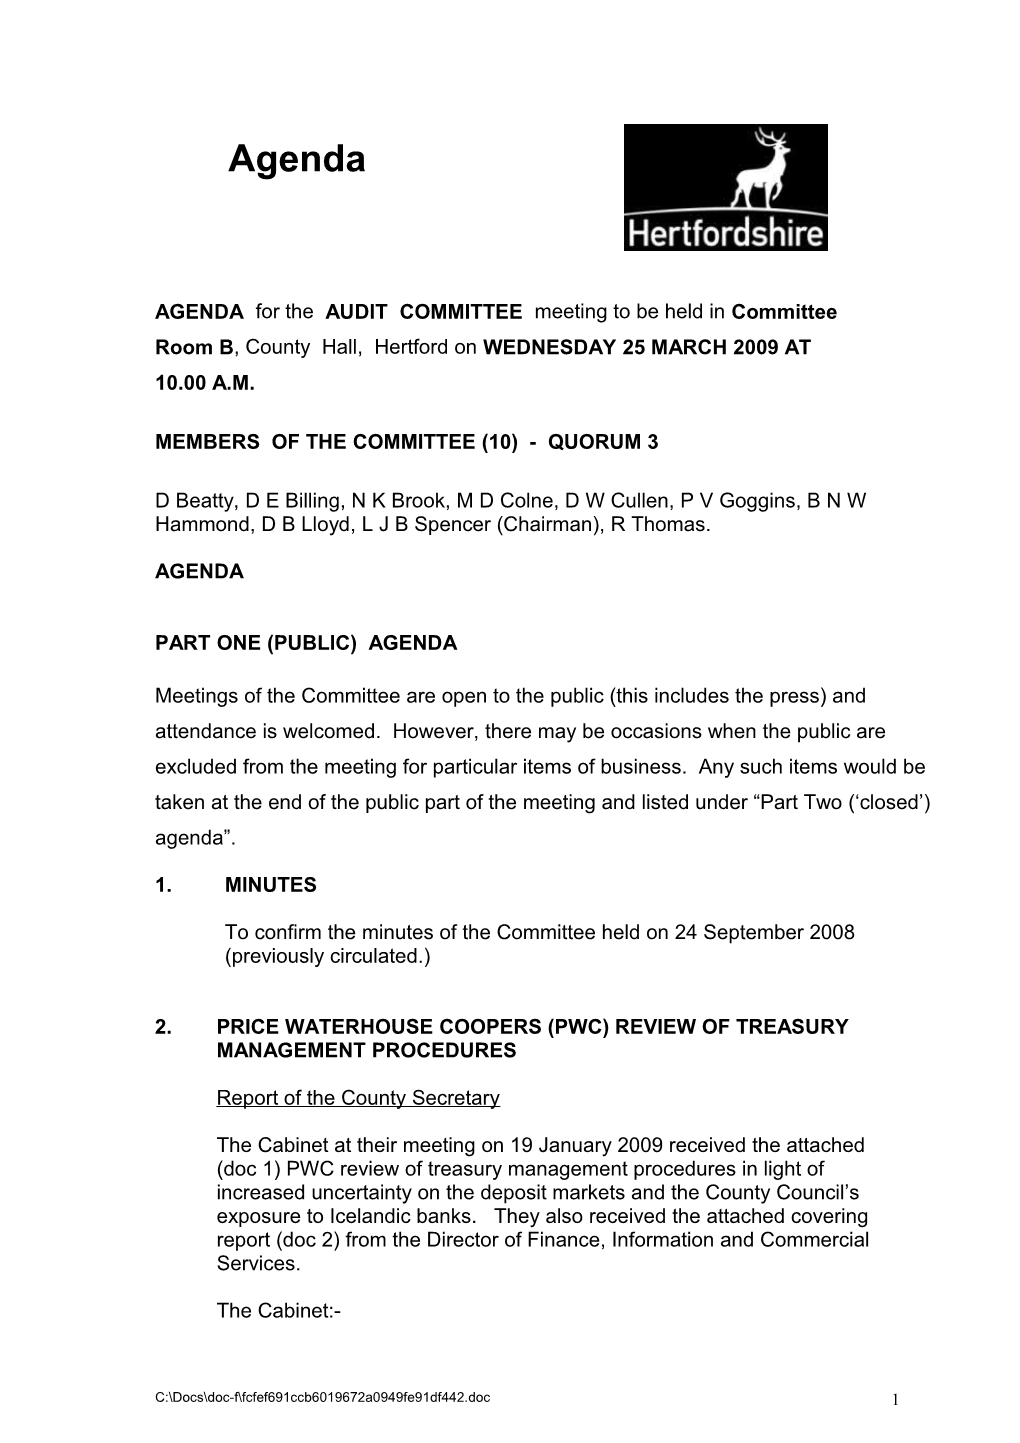 Audit Committee Agenda 25 June 2008